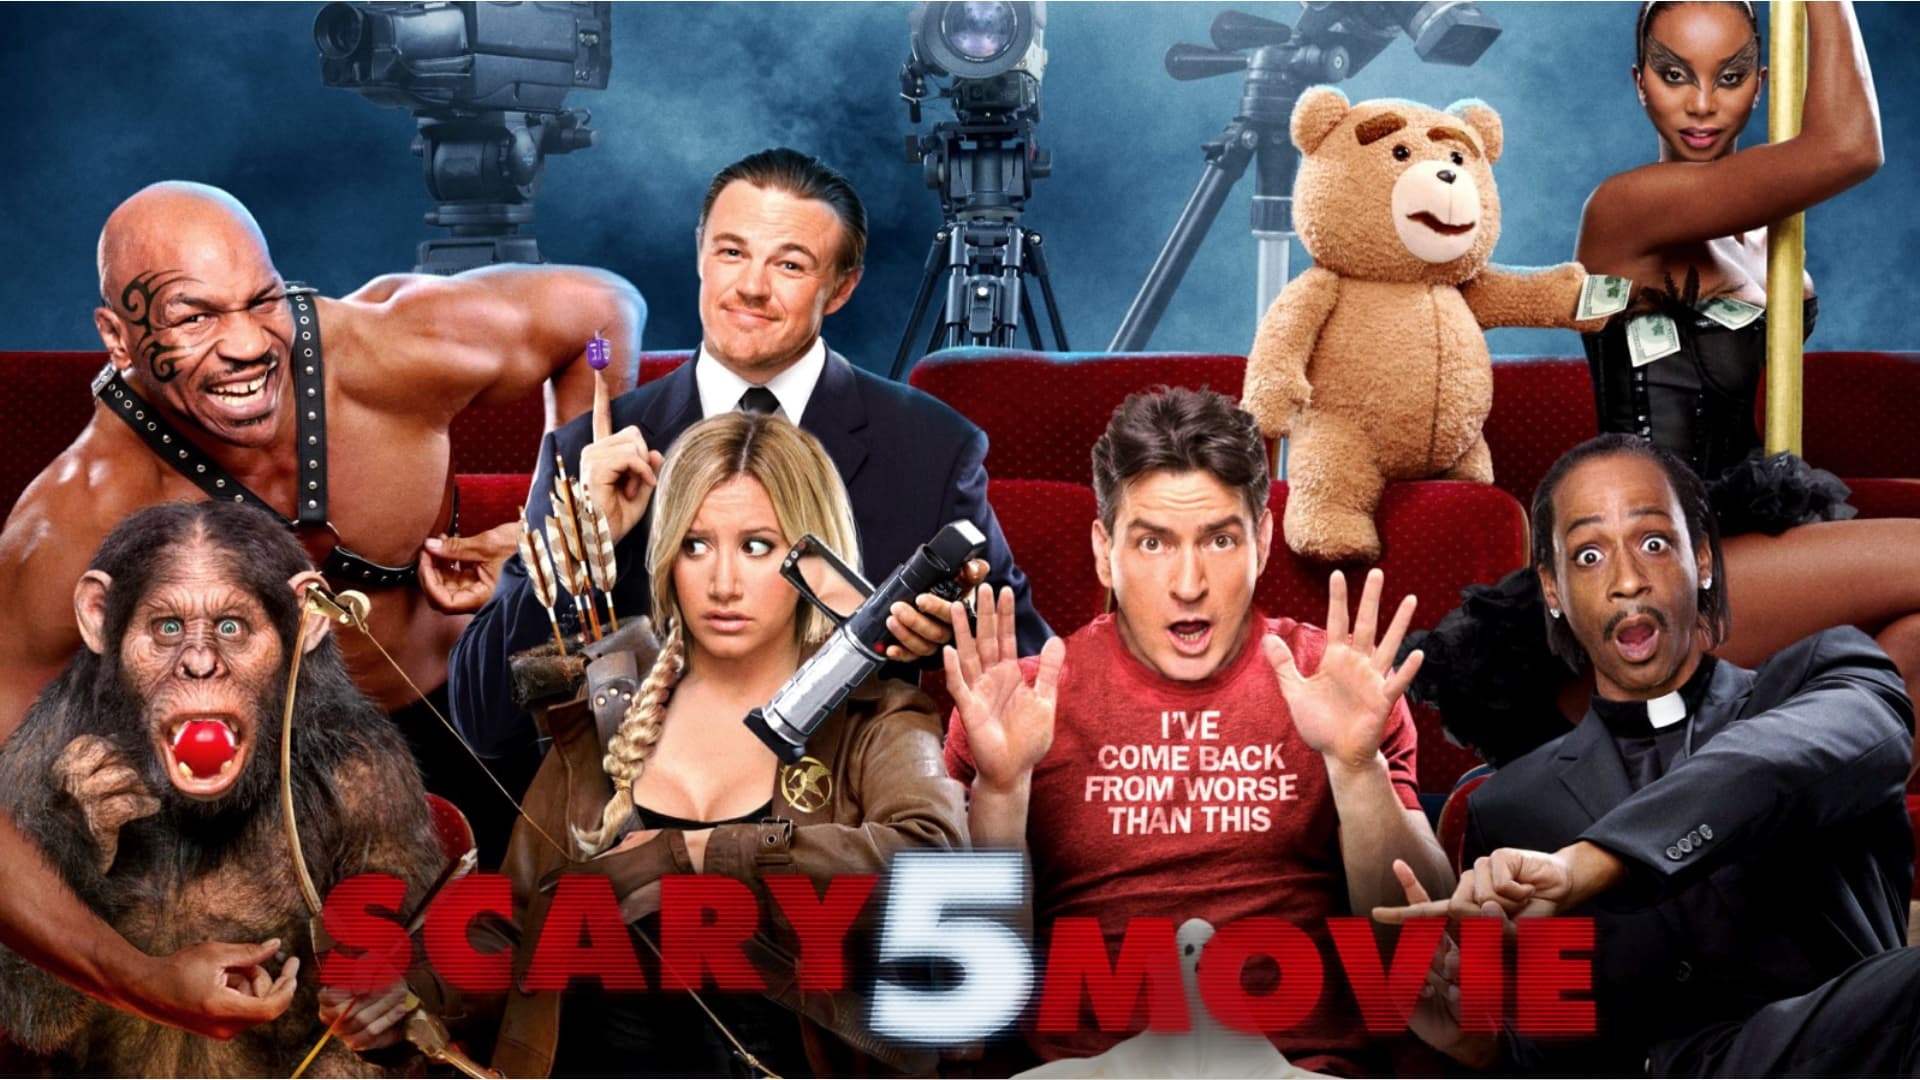 Scary Movie 5 (2013)